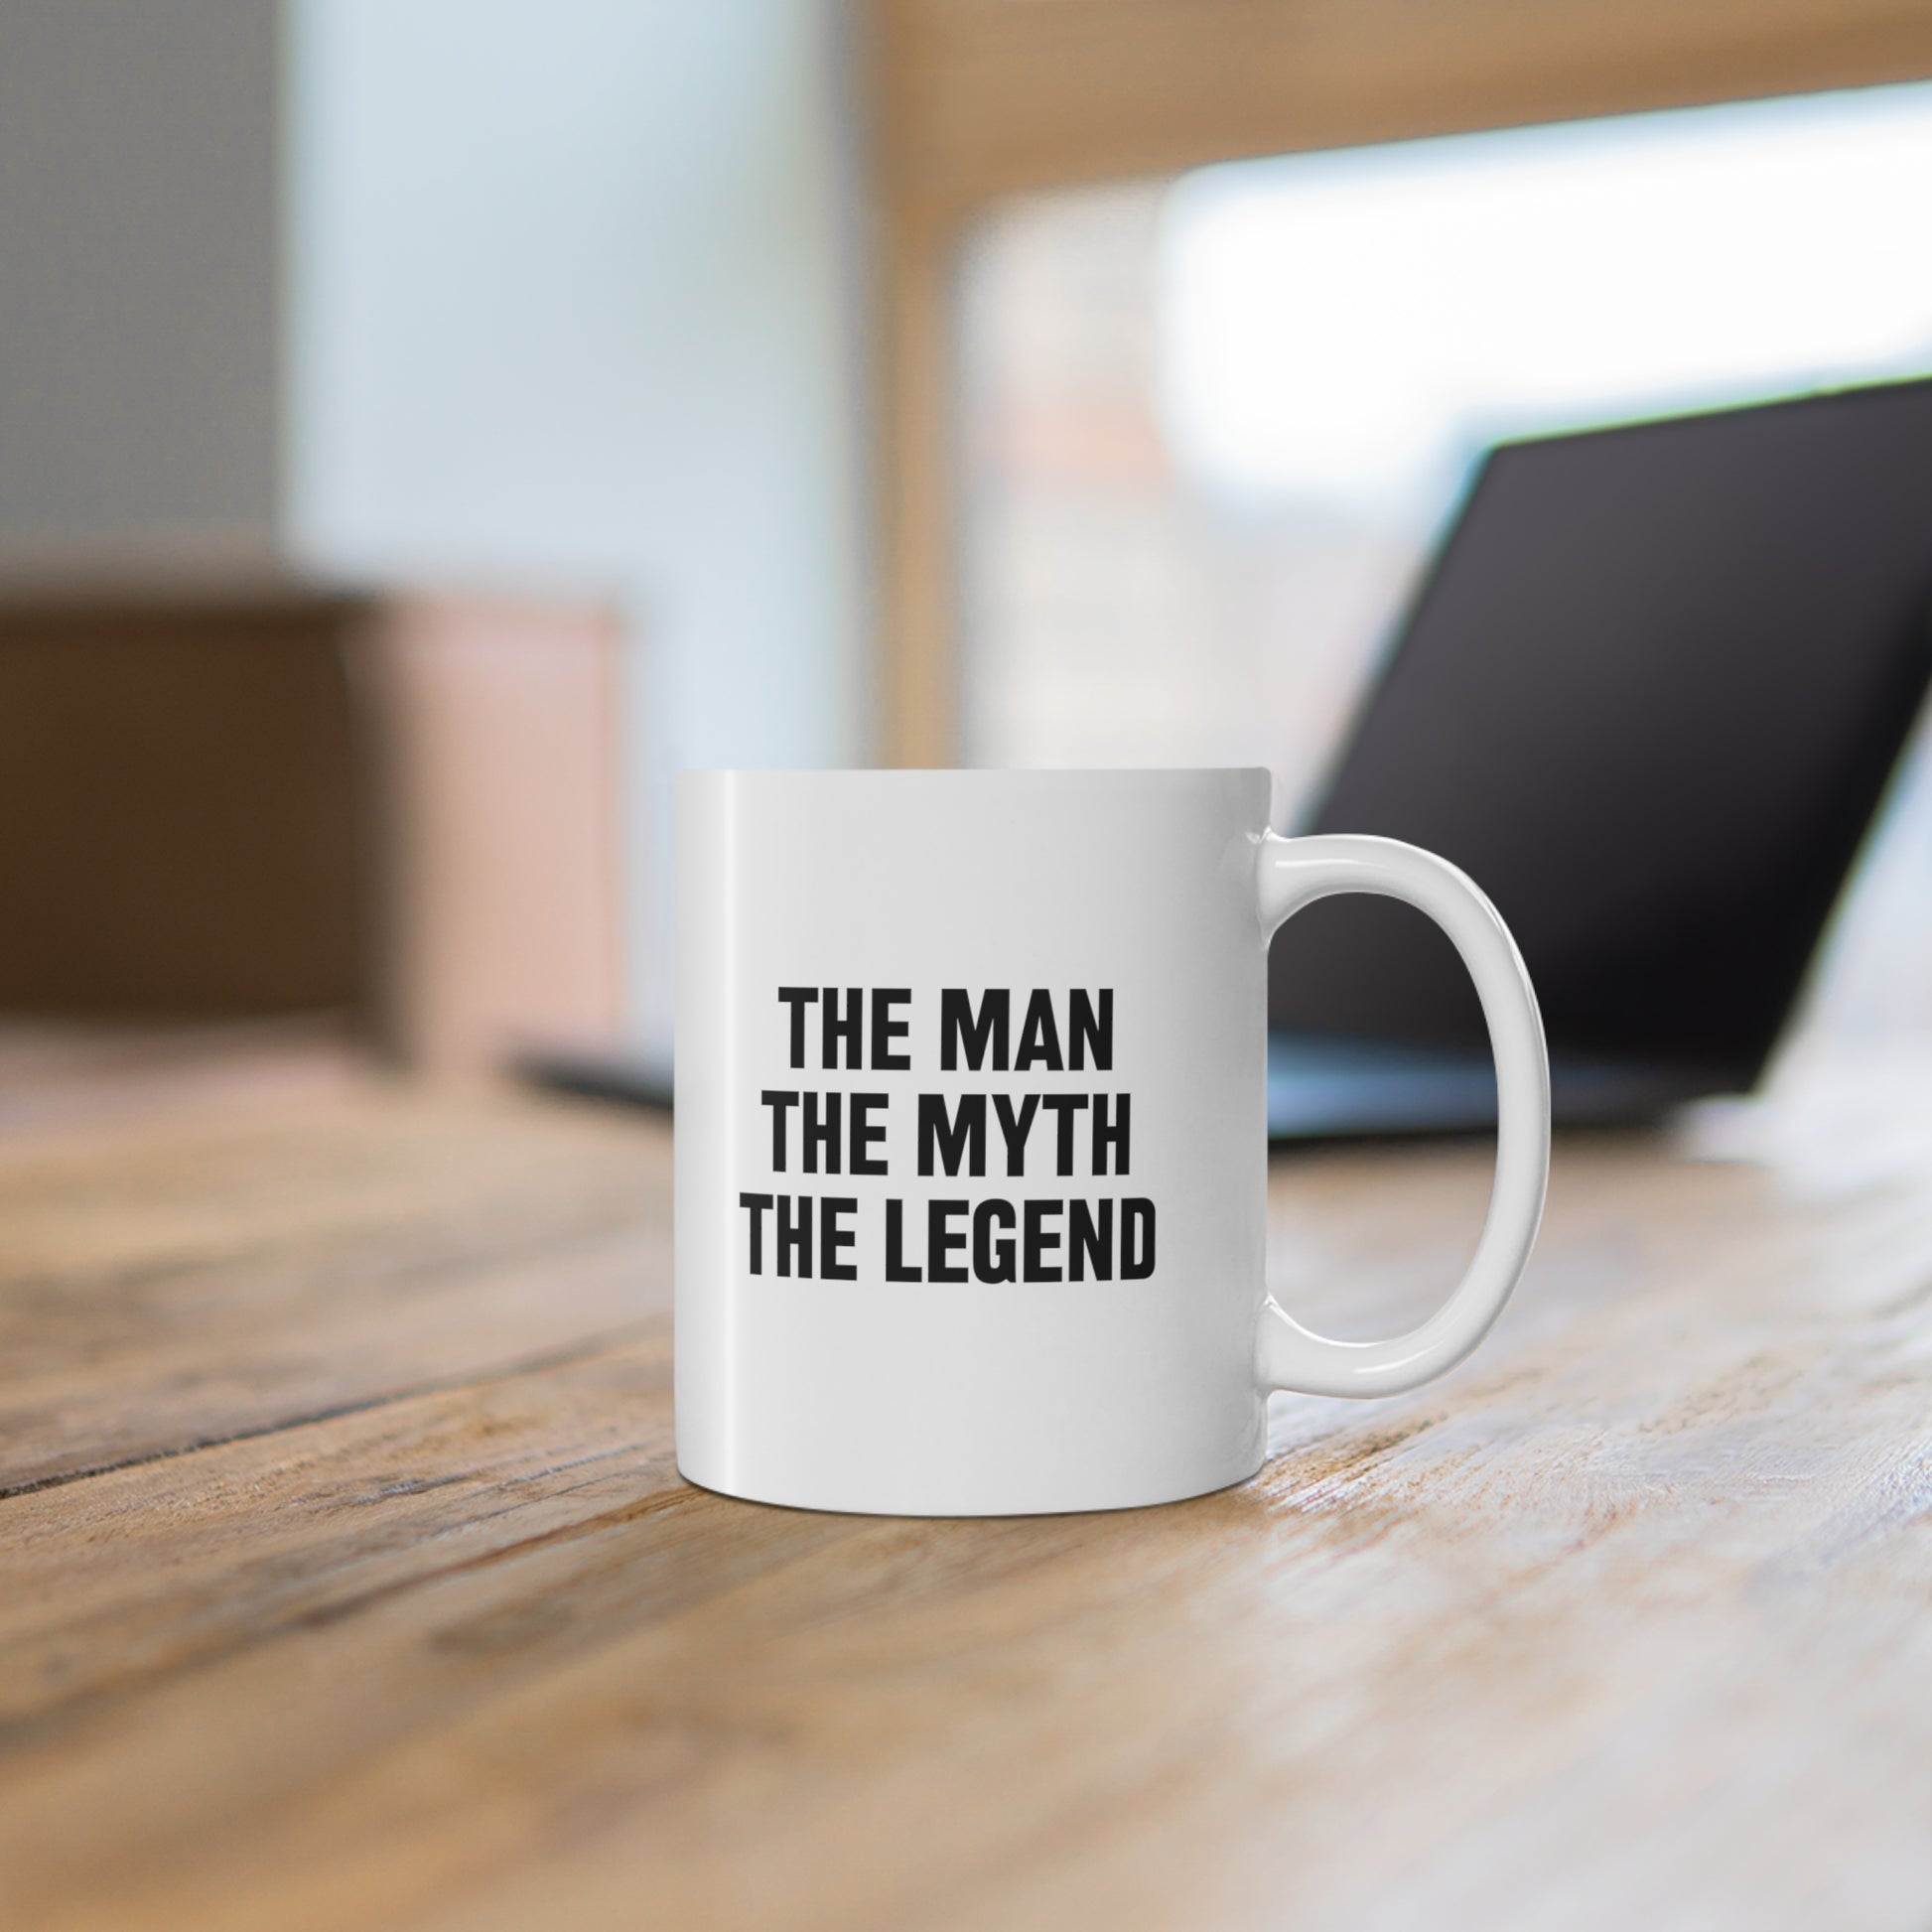 11oz ceramic mug with quote The Man The Myth The Legend